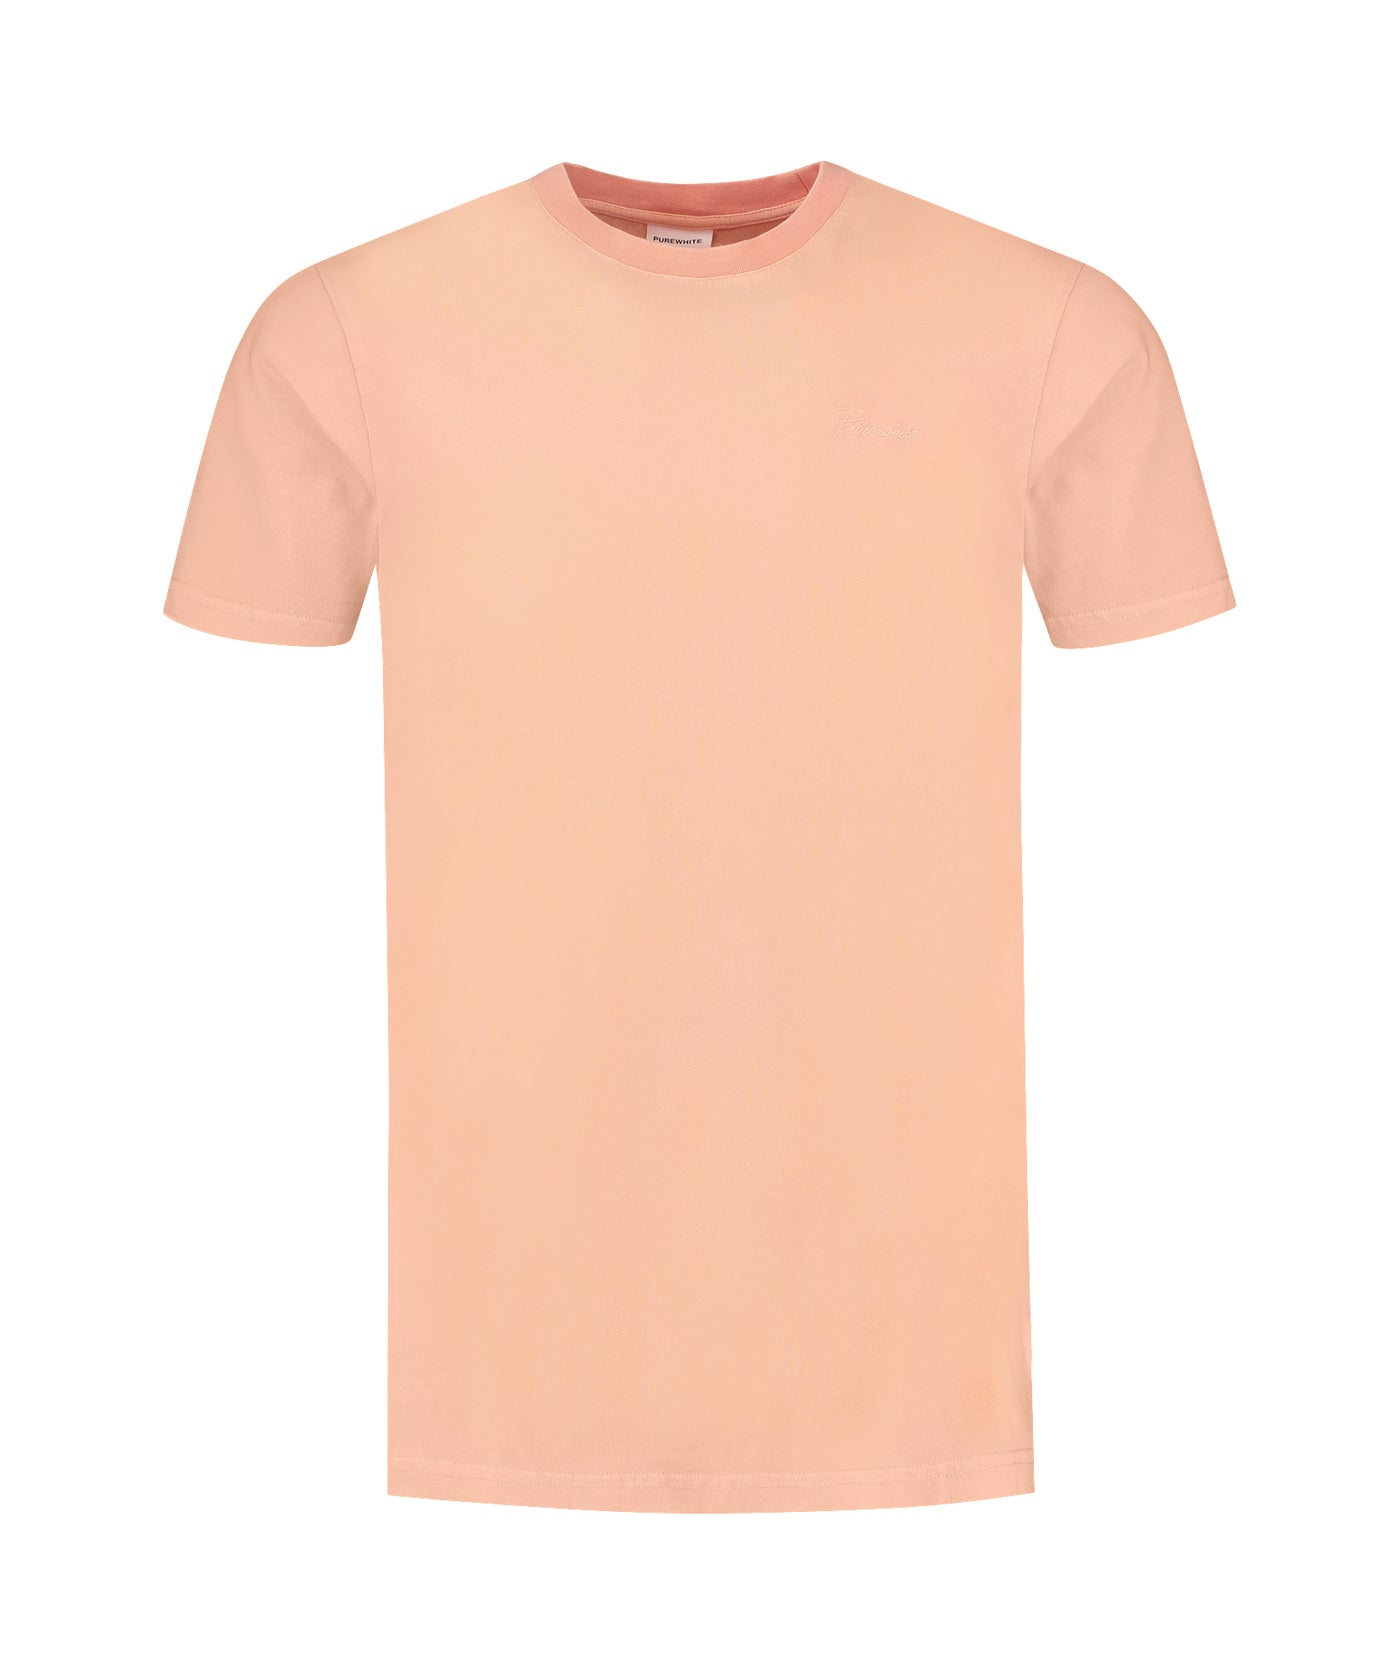 PureWhite - 23010106 - T-shirt - Orange